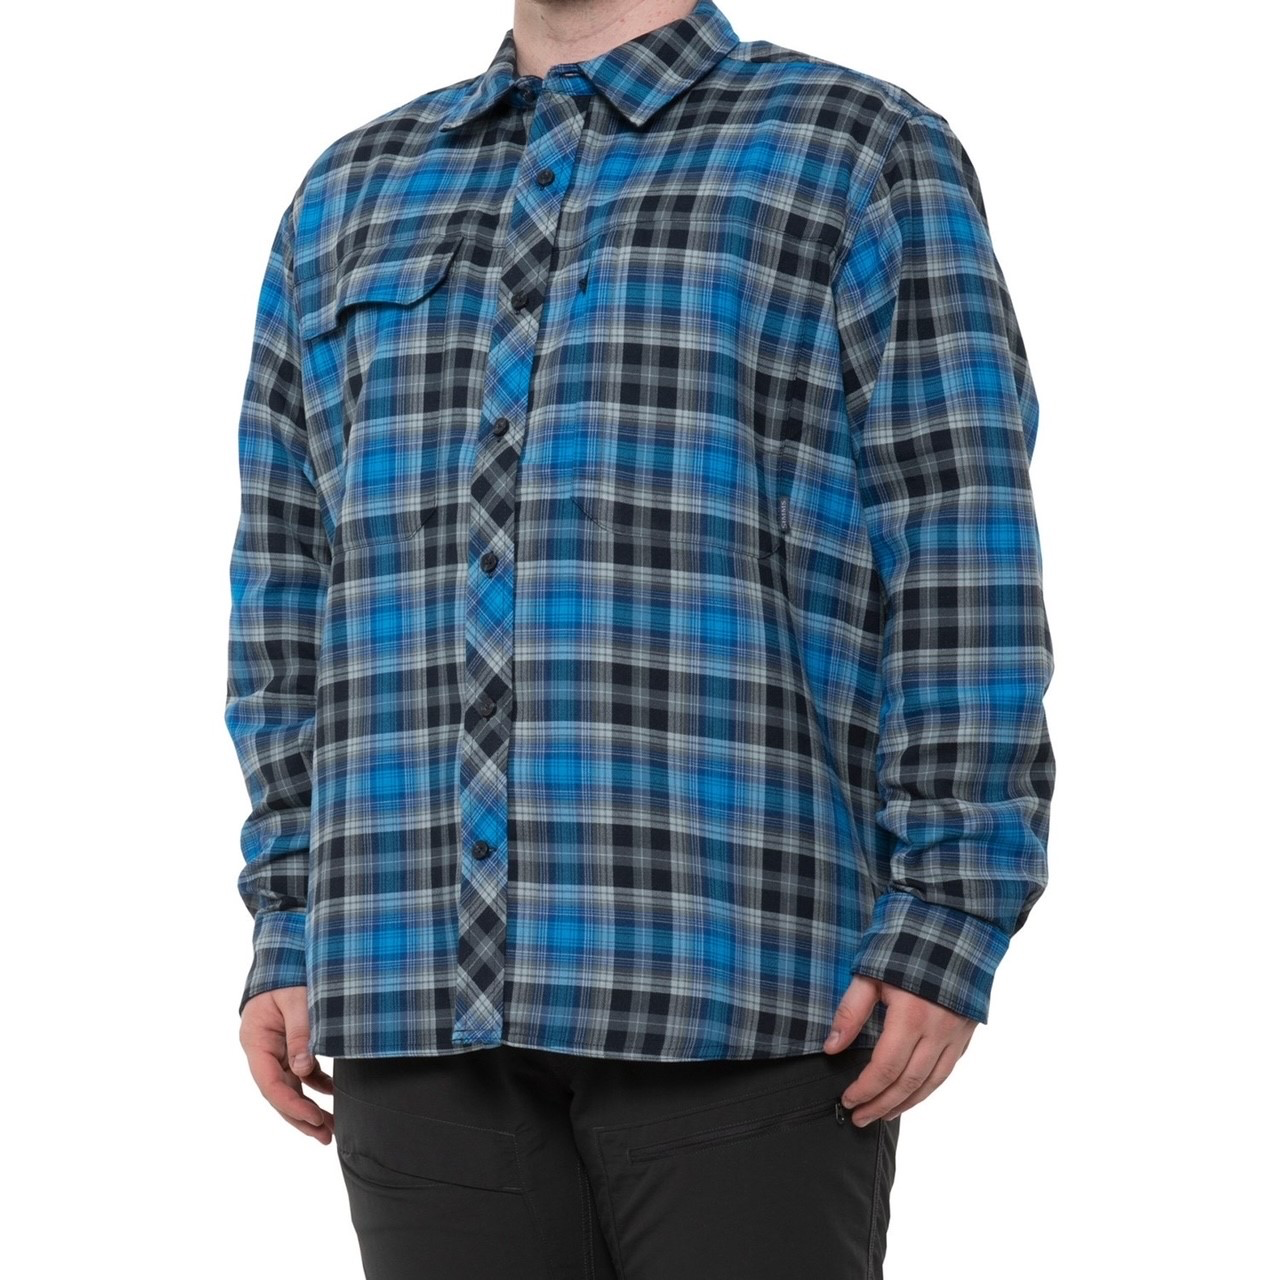 Simms M's Guide Flannel Shirt - Admiral Blue Plaid - Small